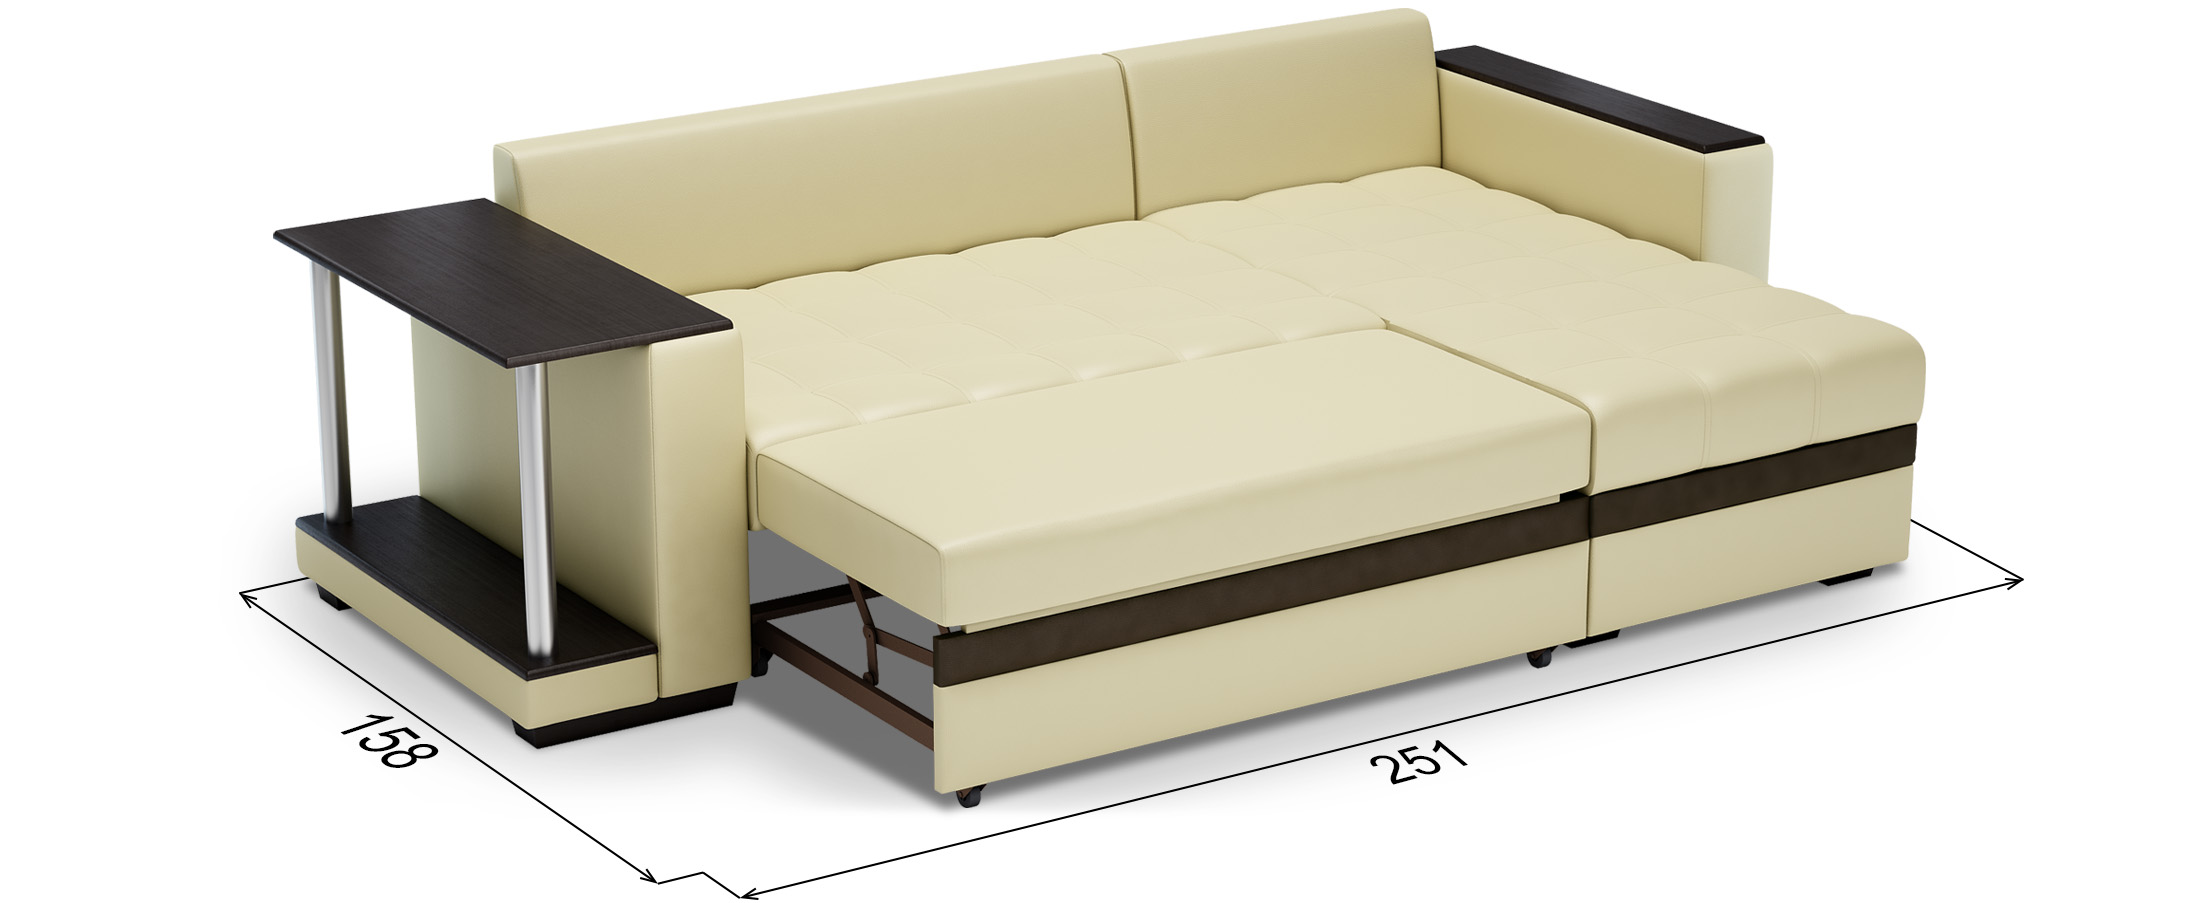 Длина спального места дивана